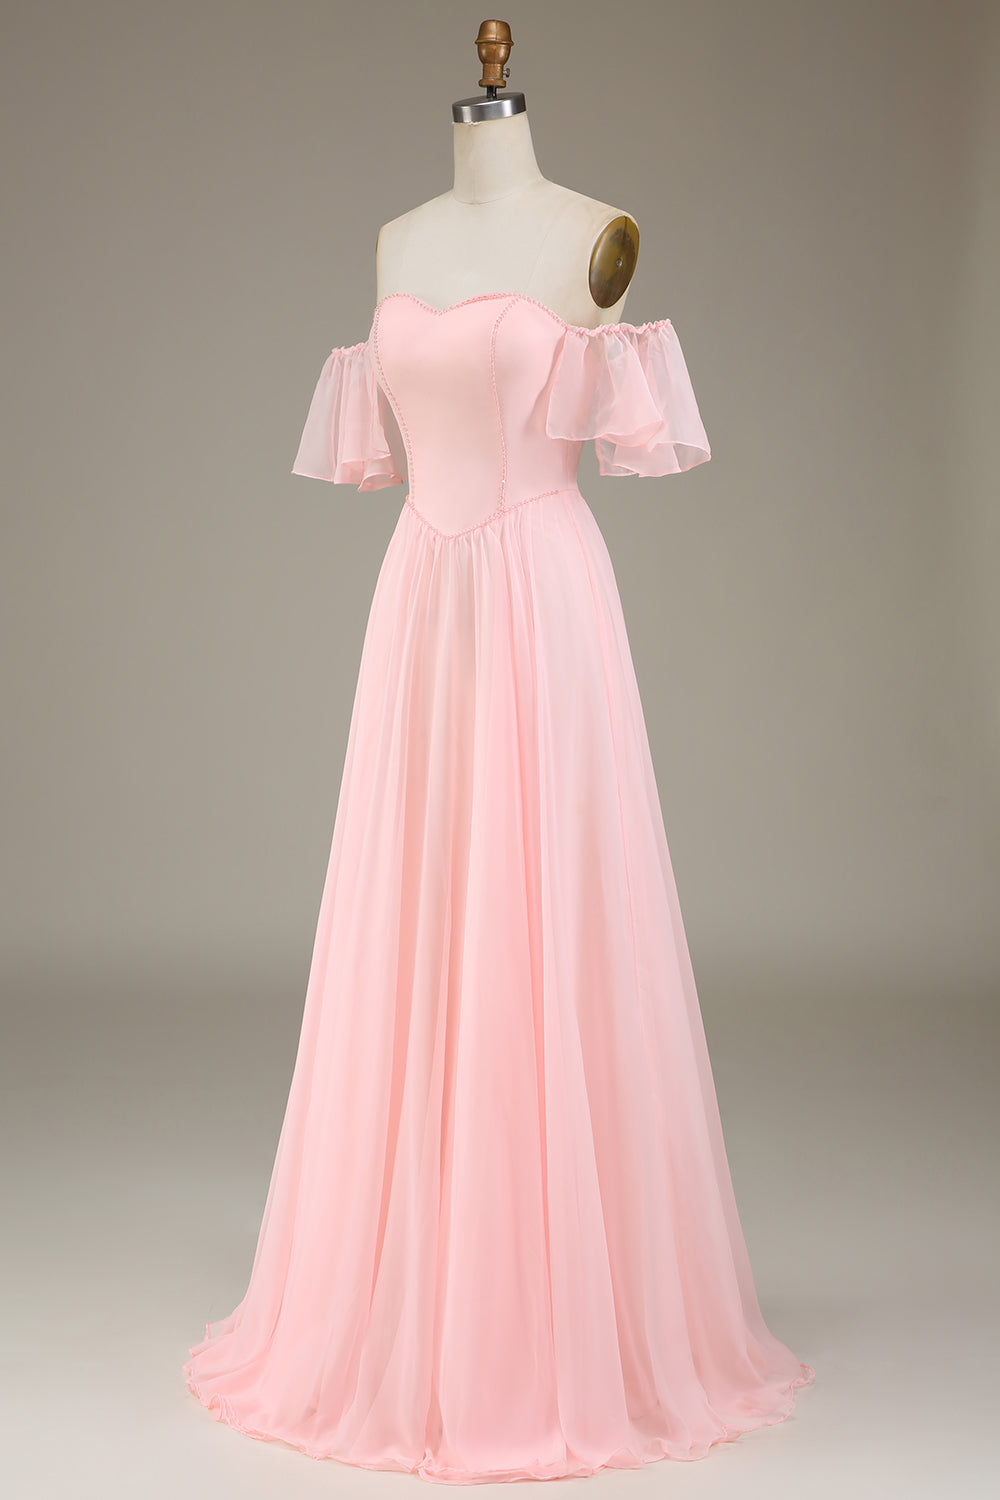 Blush Pink A-Line Off the Shoulder Long Bridesmaid Dress